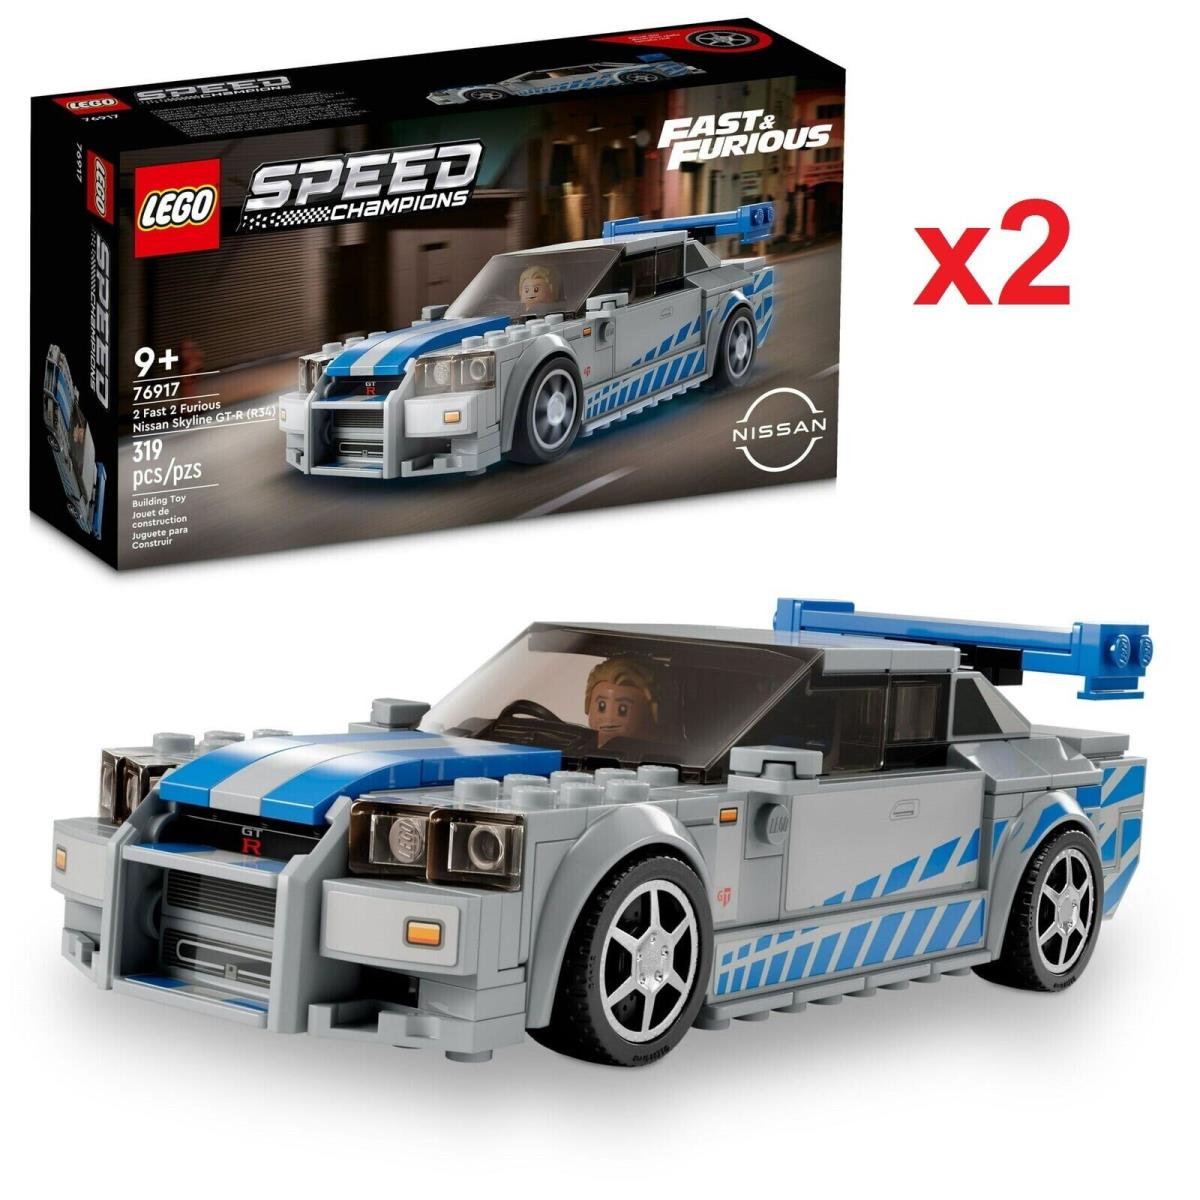 2x Lego Speed Champions: 2 Fast 2 Furious Nissan Skyline Gt-r R34 76917